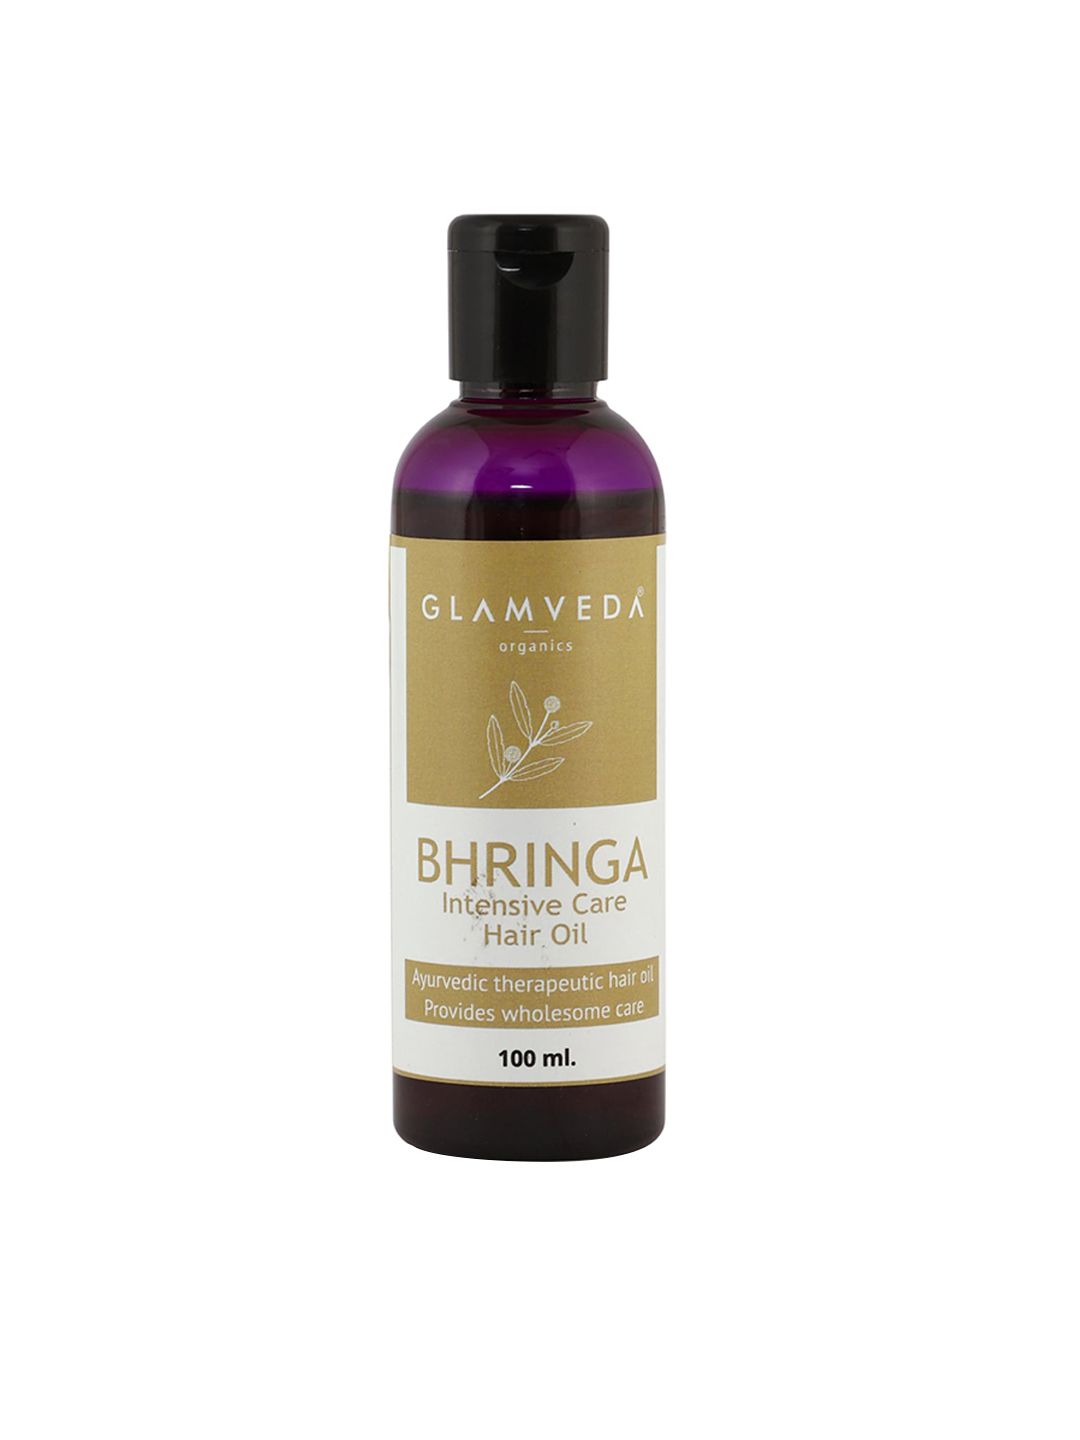 Glamveda Bhringa Intensive Care Hair oil 100 ml Price in India